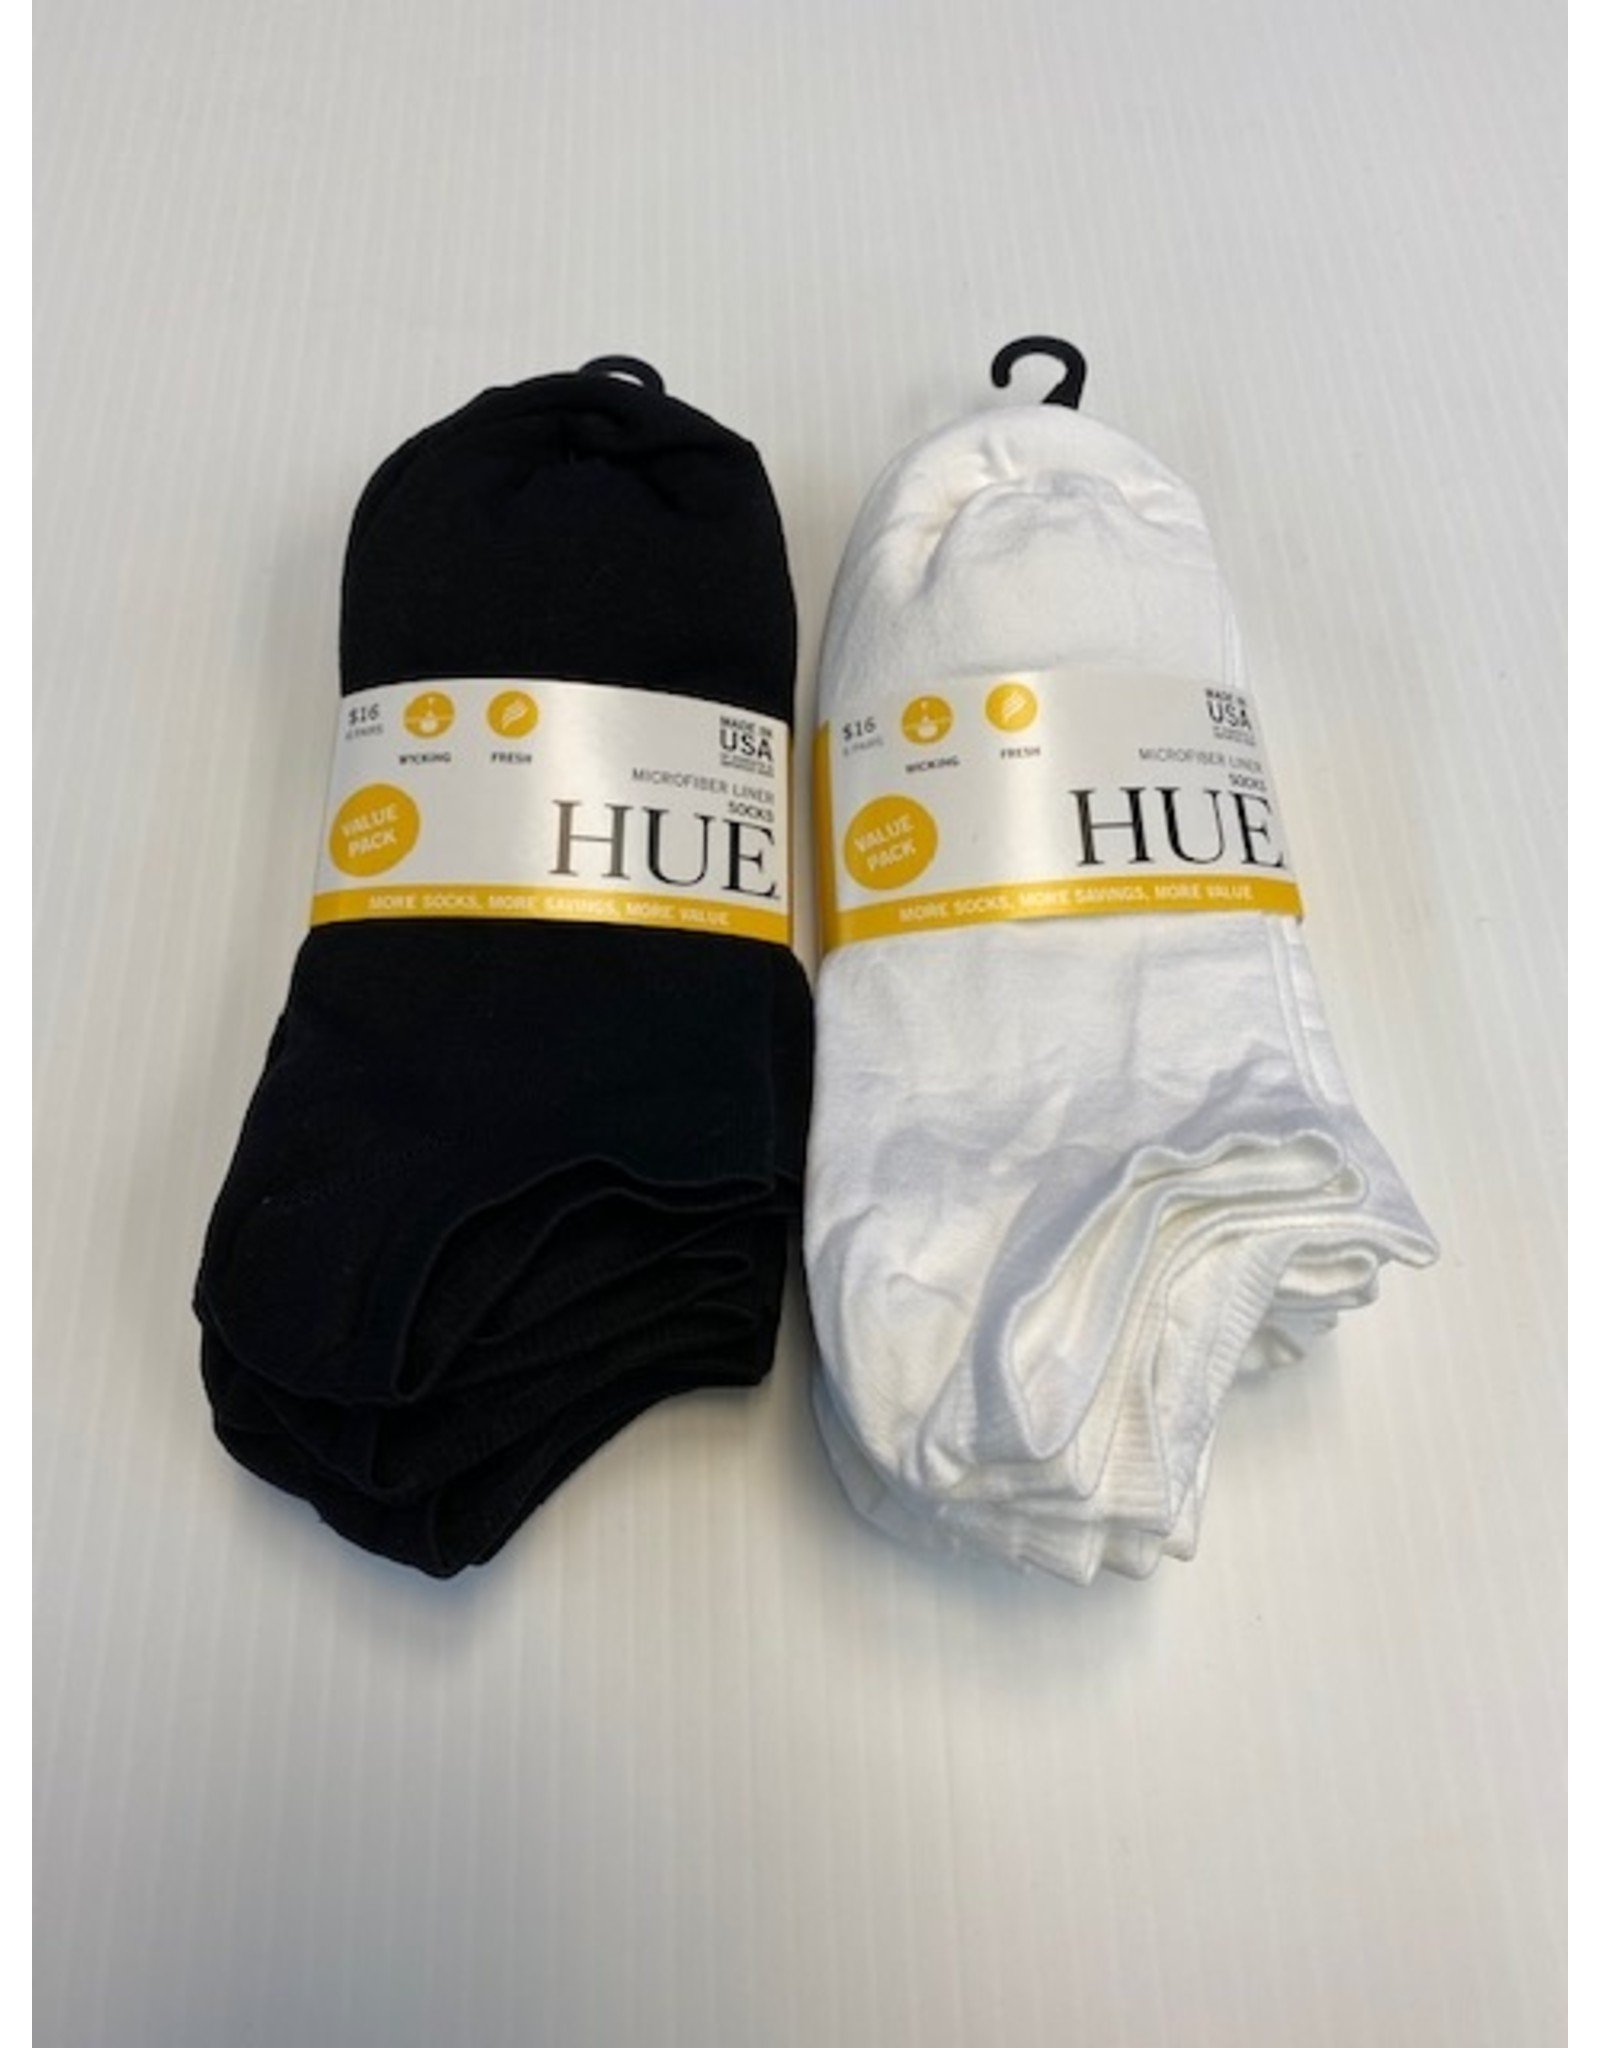 https://cdn.shoplightspeed.com/shops/635284/files/19469063/1600x2048x2/hue-hue-womens-microfiber-liner-socks-6-pack-u2478.jpg